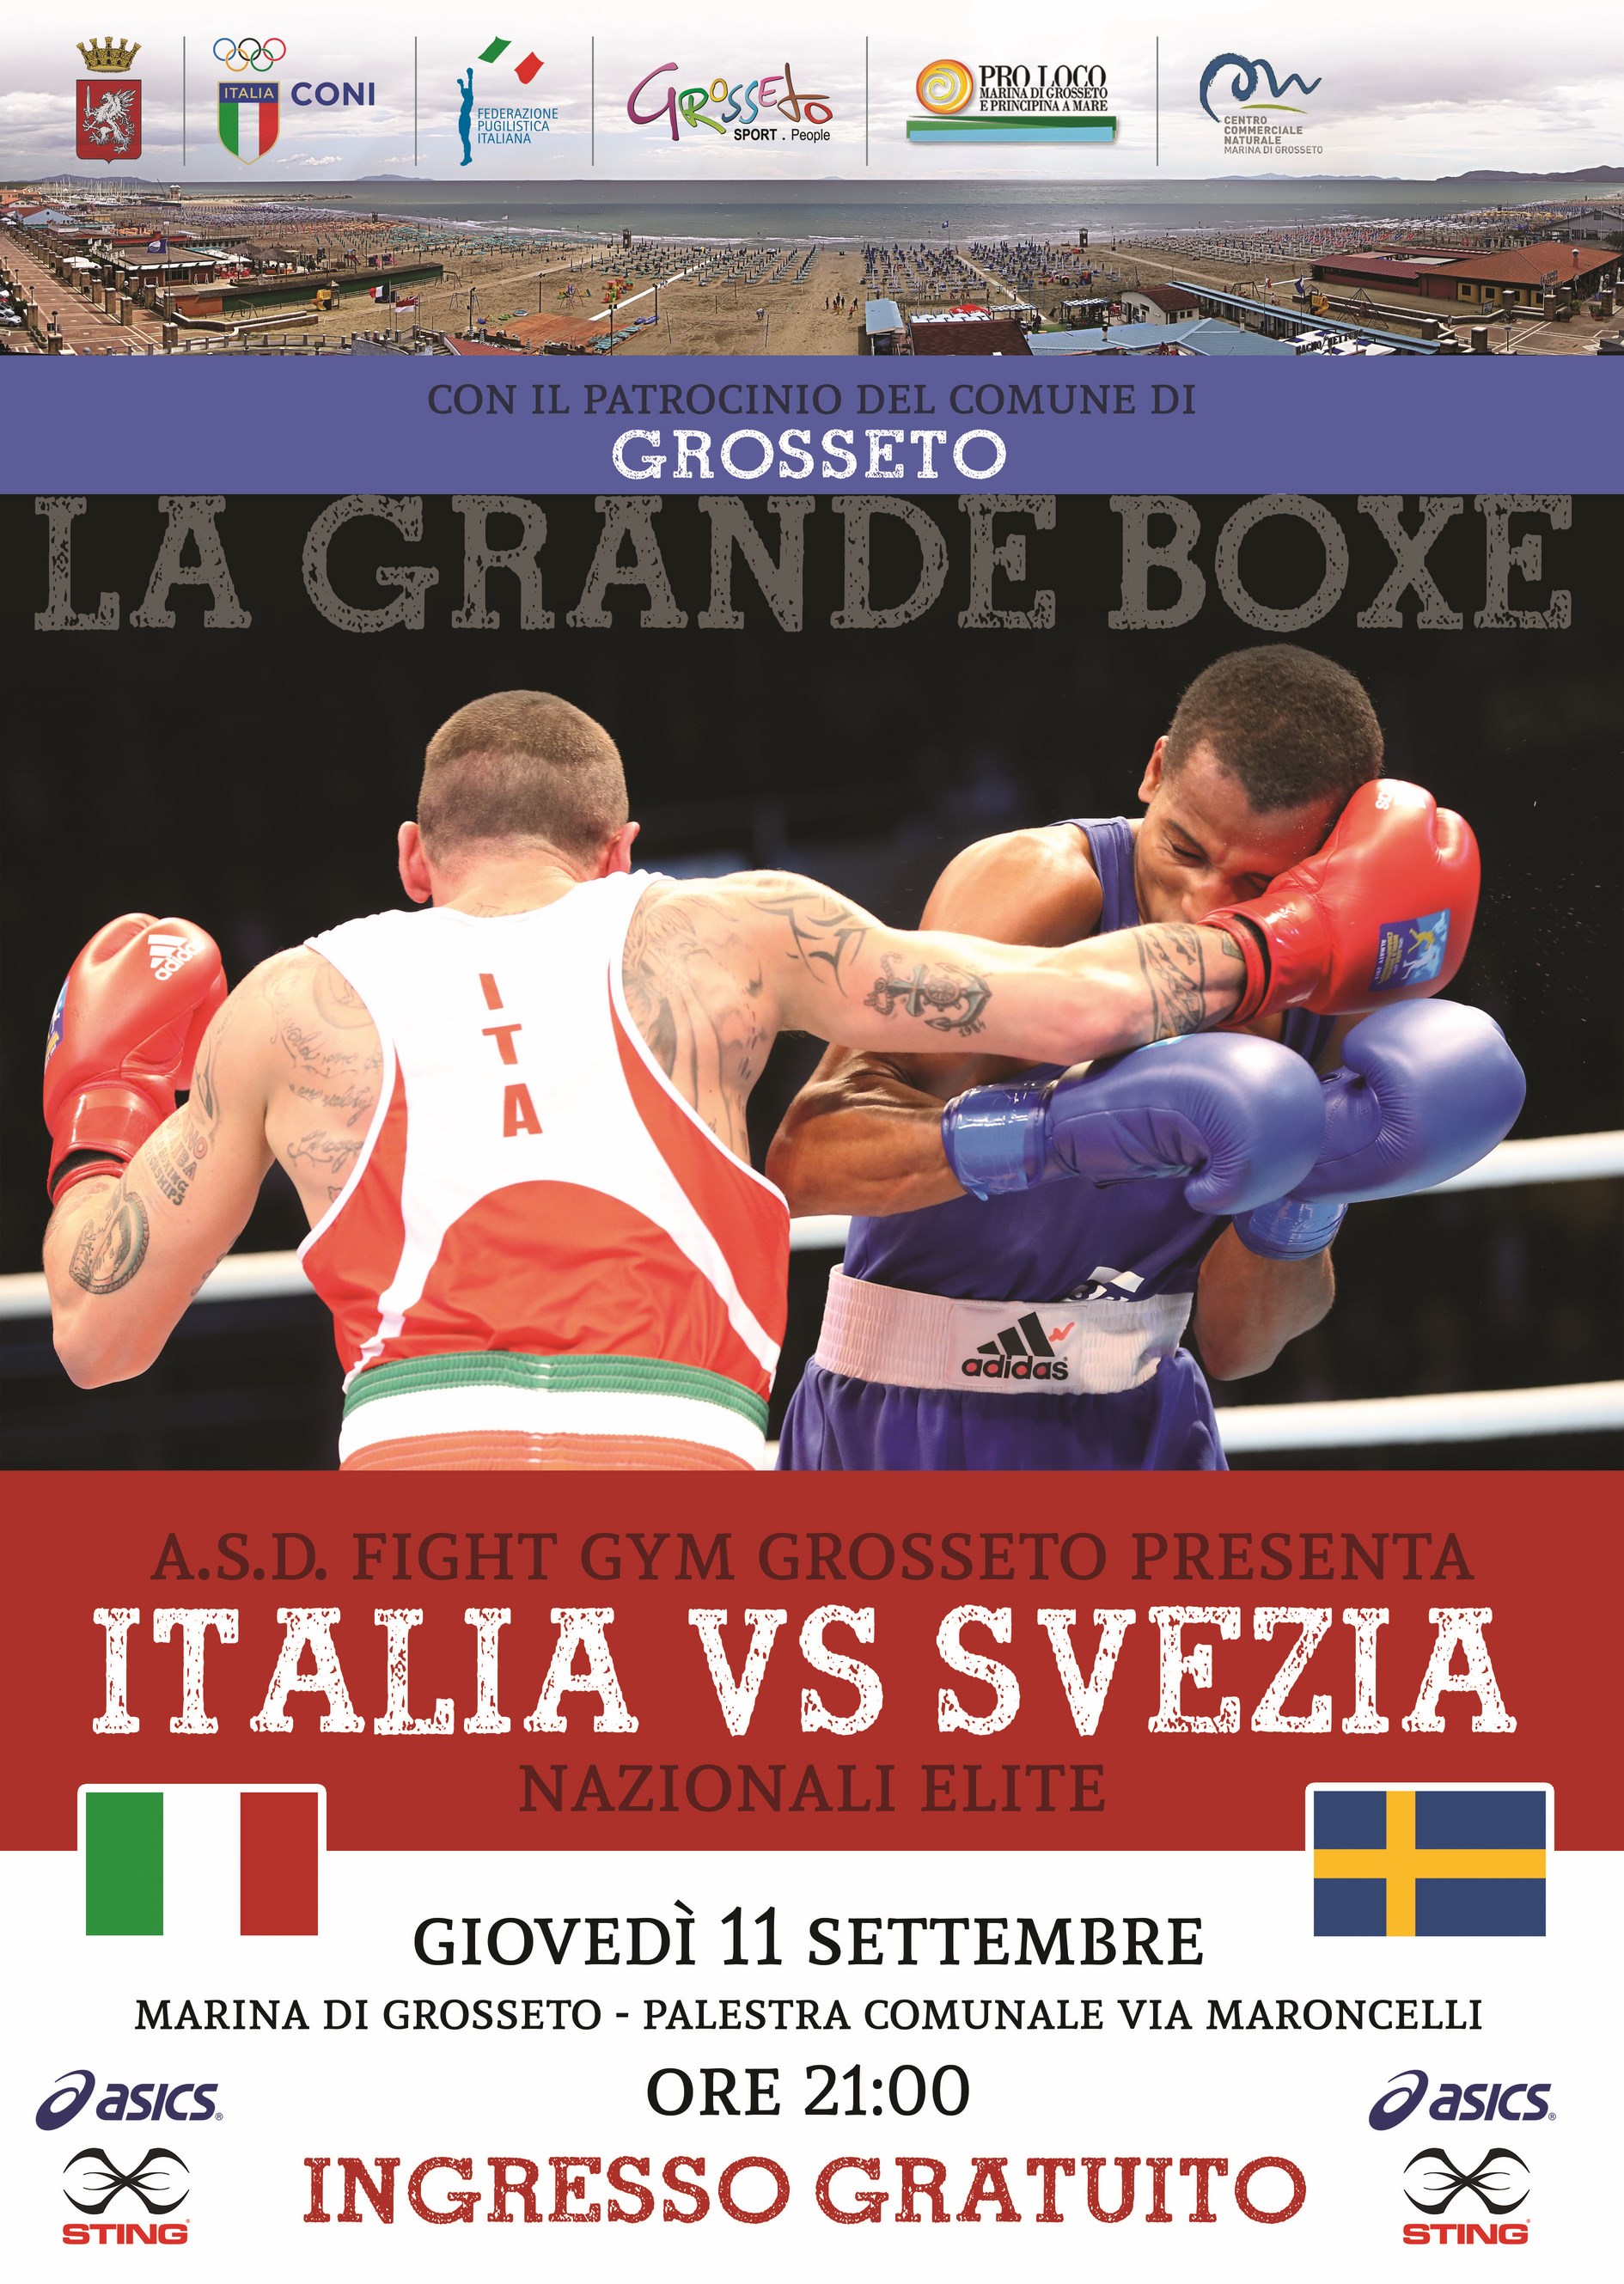 #ItaBoxing Nazionale Elite: Dual Match Italia vs Svezia Grosseto 11 settembre 2014